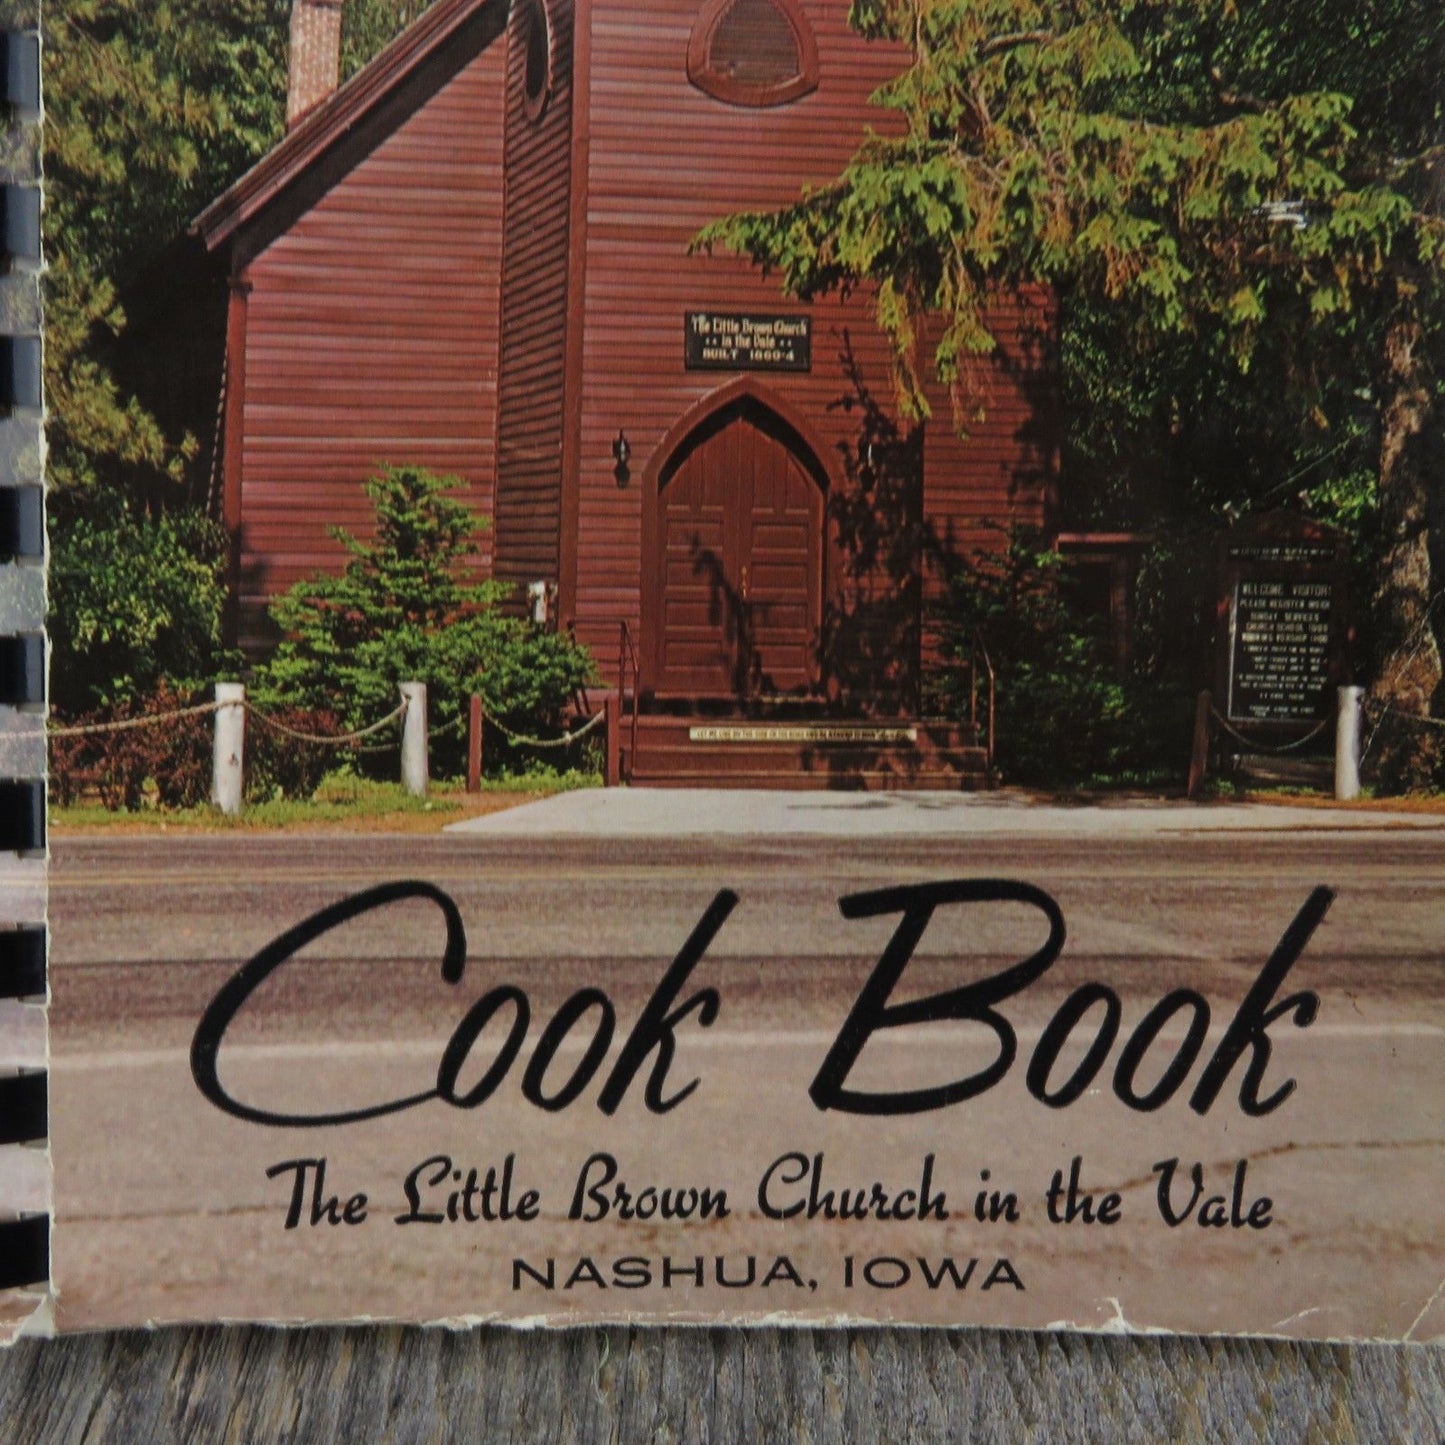 Vintage Iowa Cookbook Nashua Little Brown Church in the Vale Fellowship 1971 - At Grandma's Table